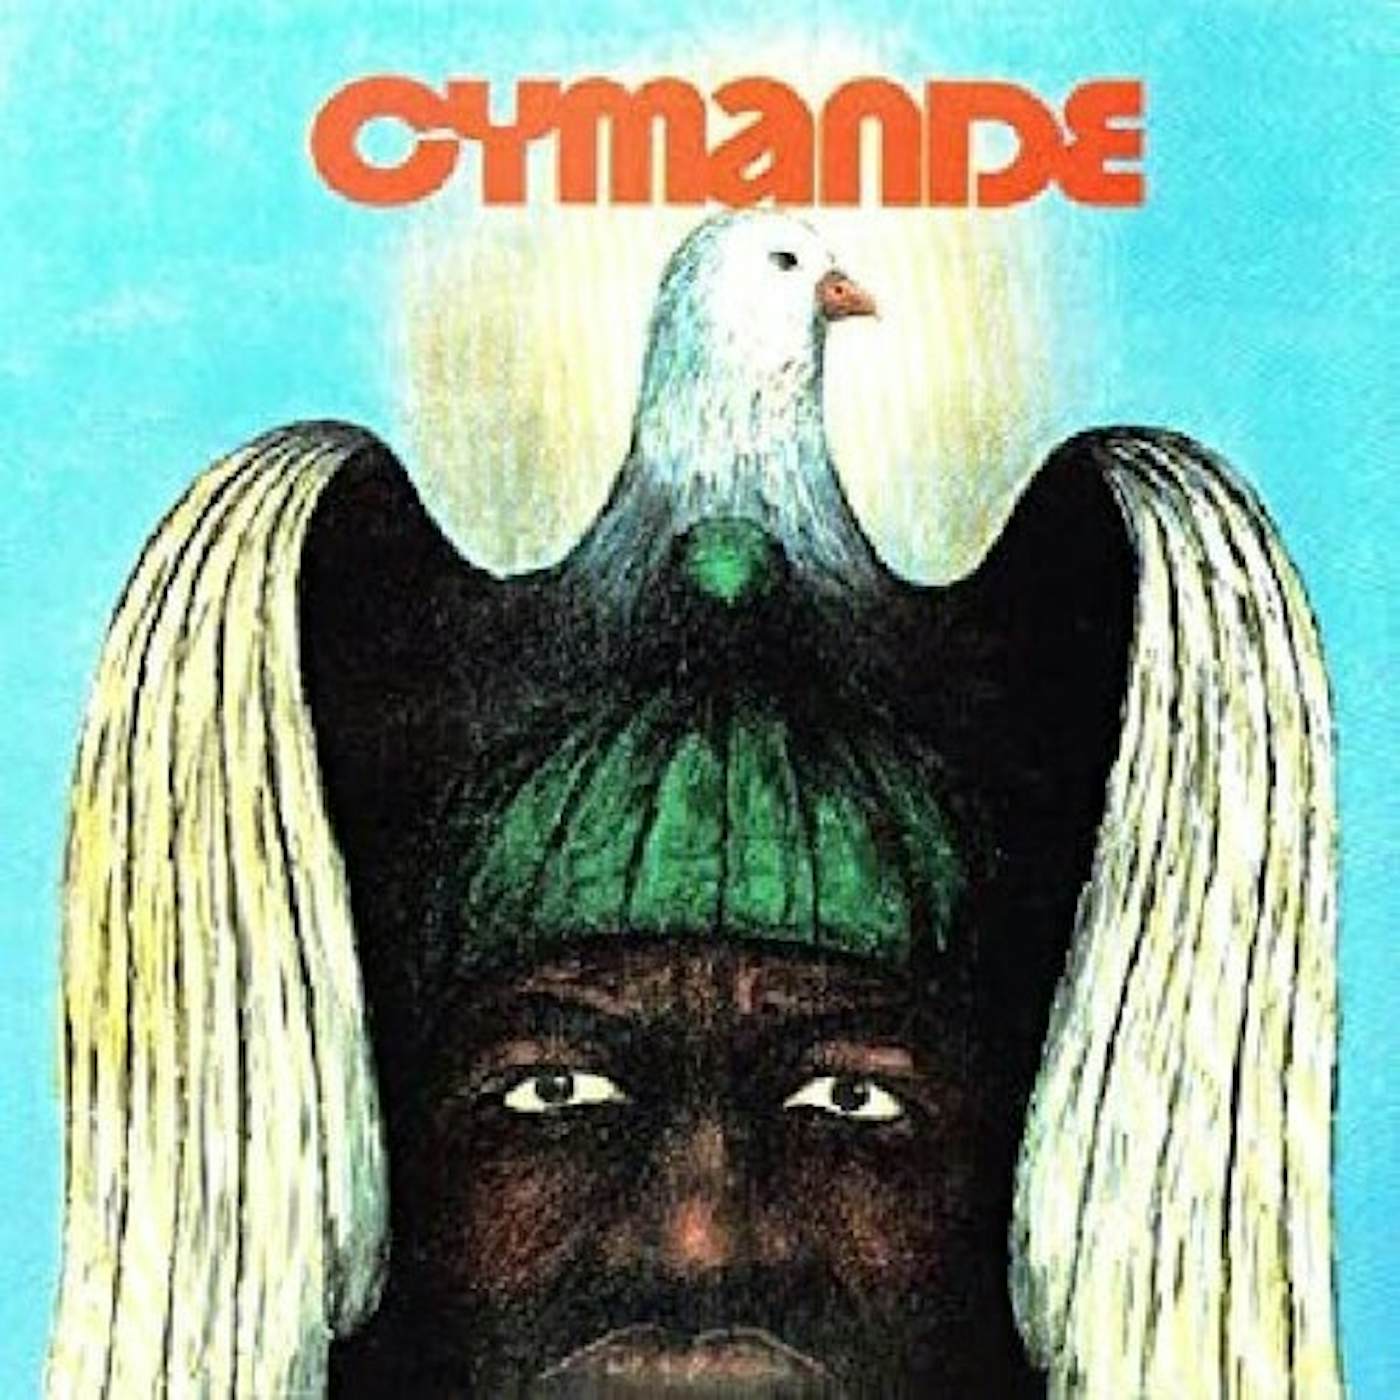 Cymande vinyl record